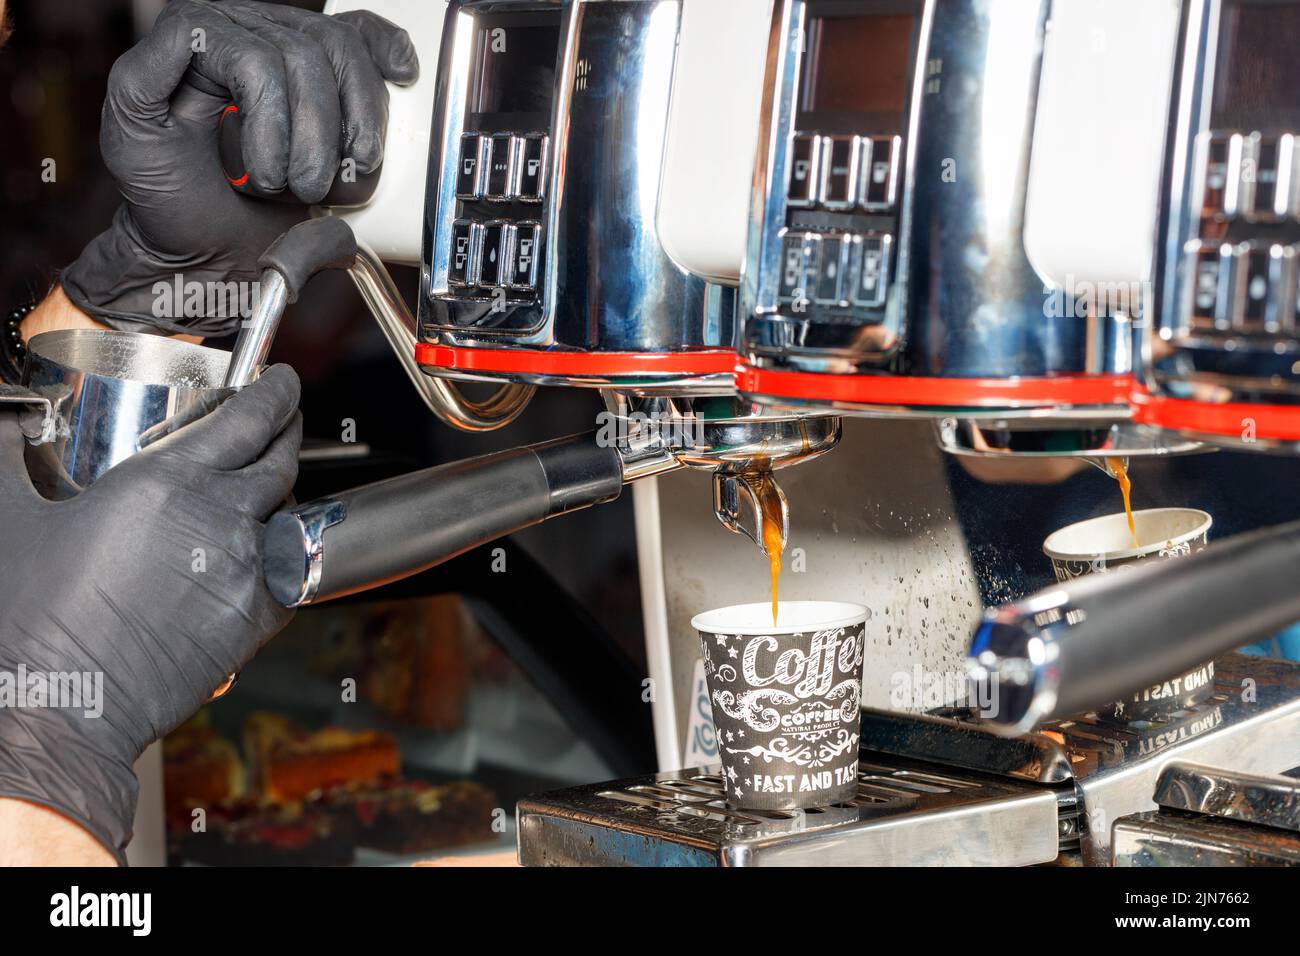 The barista's hands in black latex gloves prepare hot coffee in a coffee machine. Stock Photo